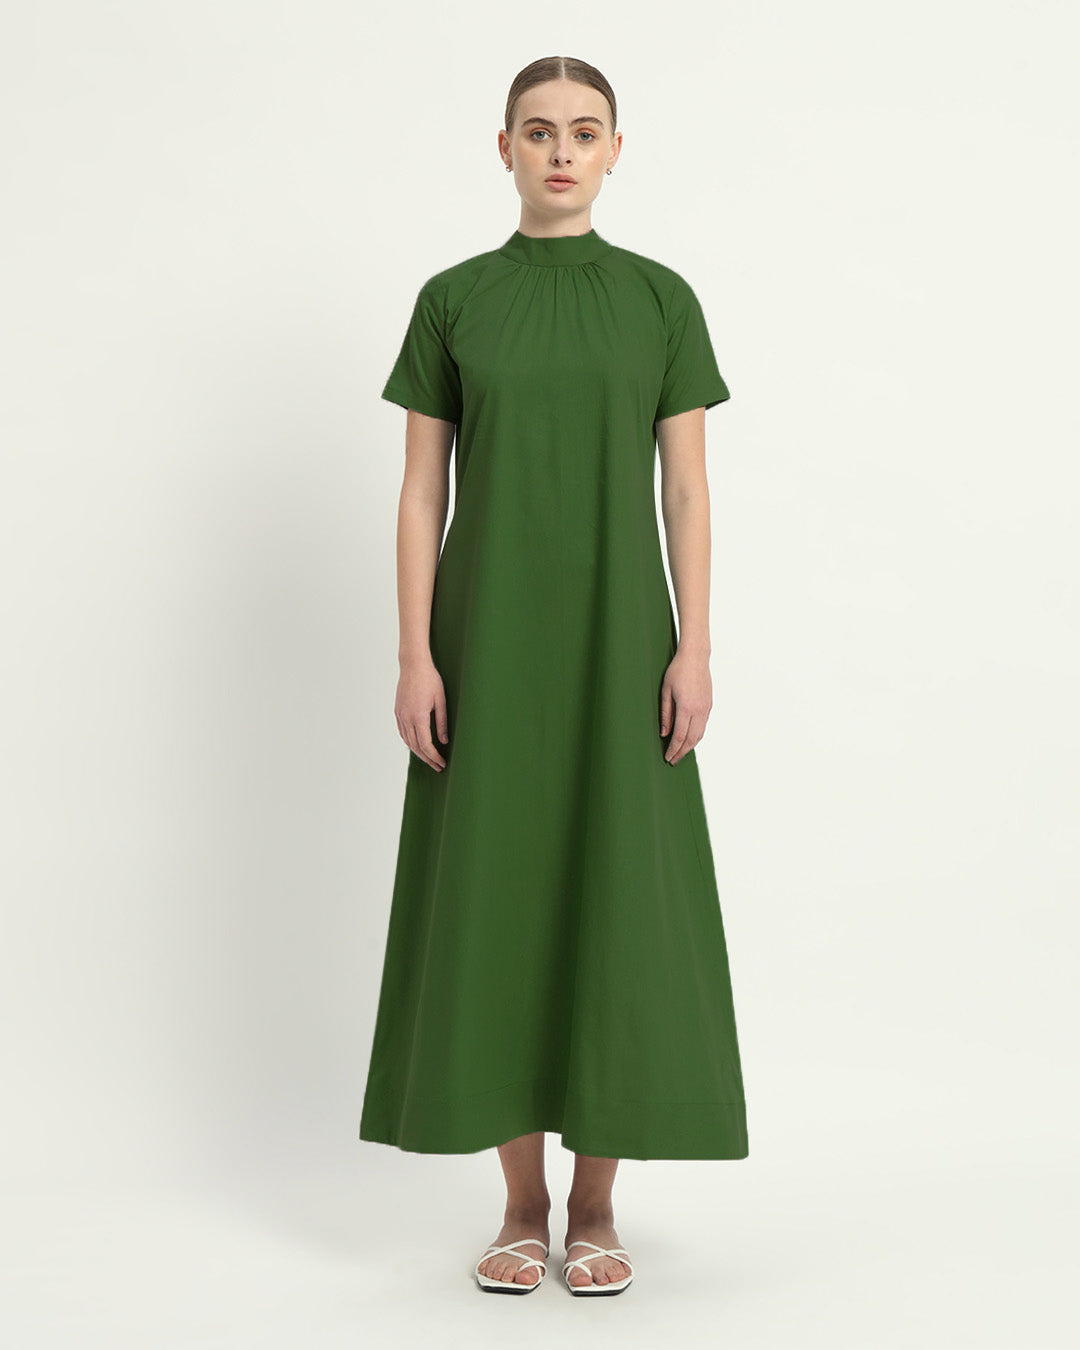 The Hermon Emerald Cotton Dress